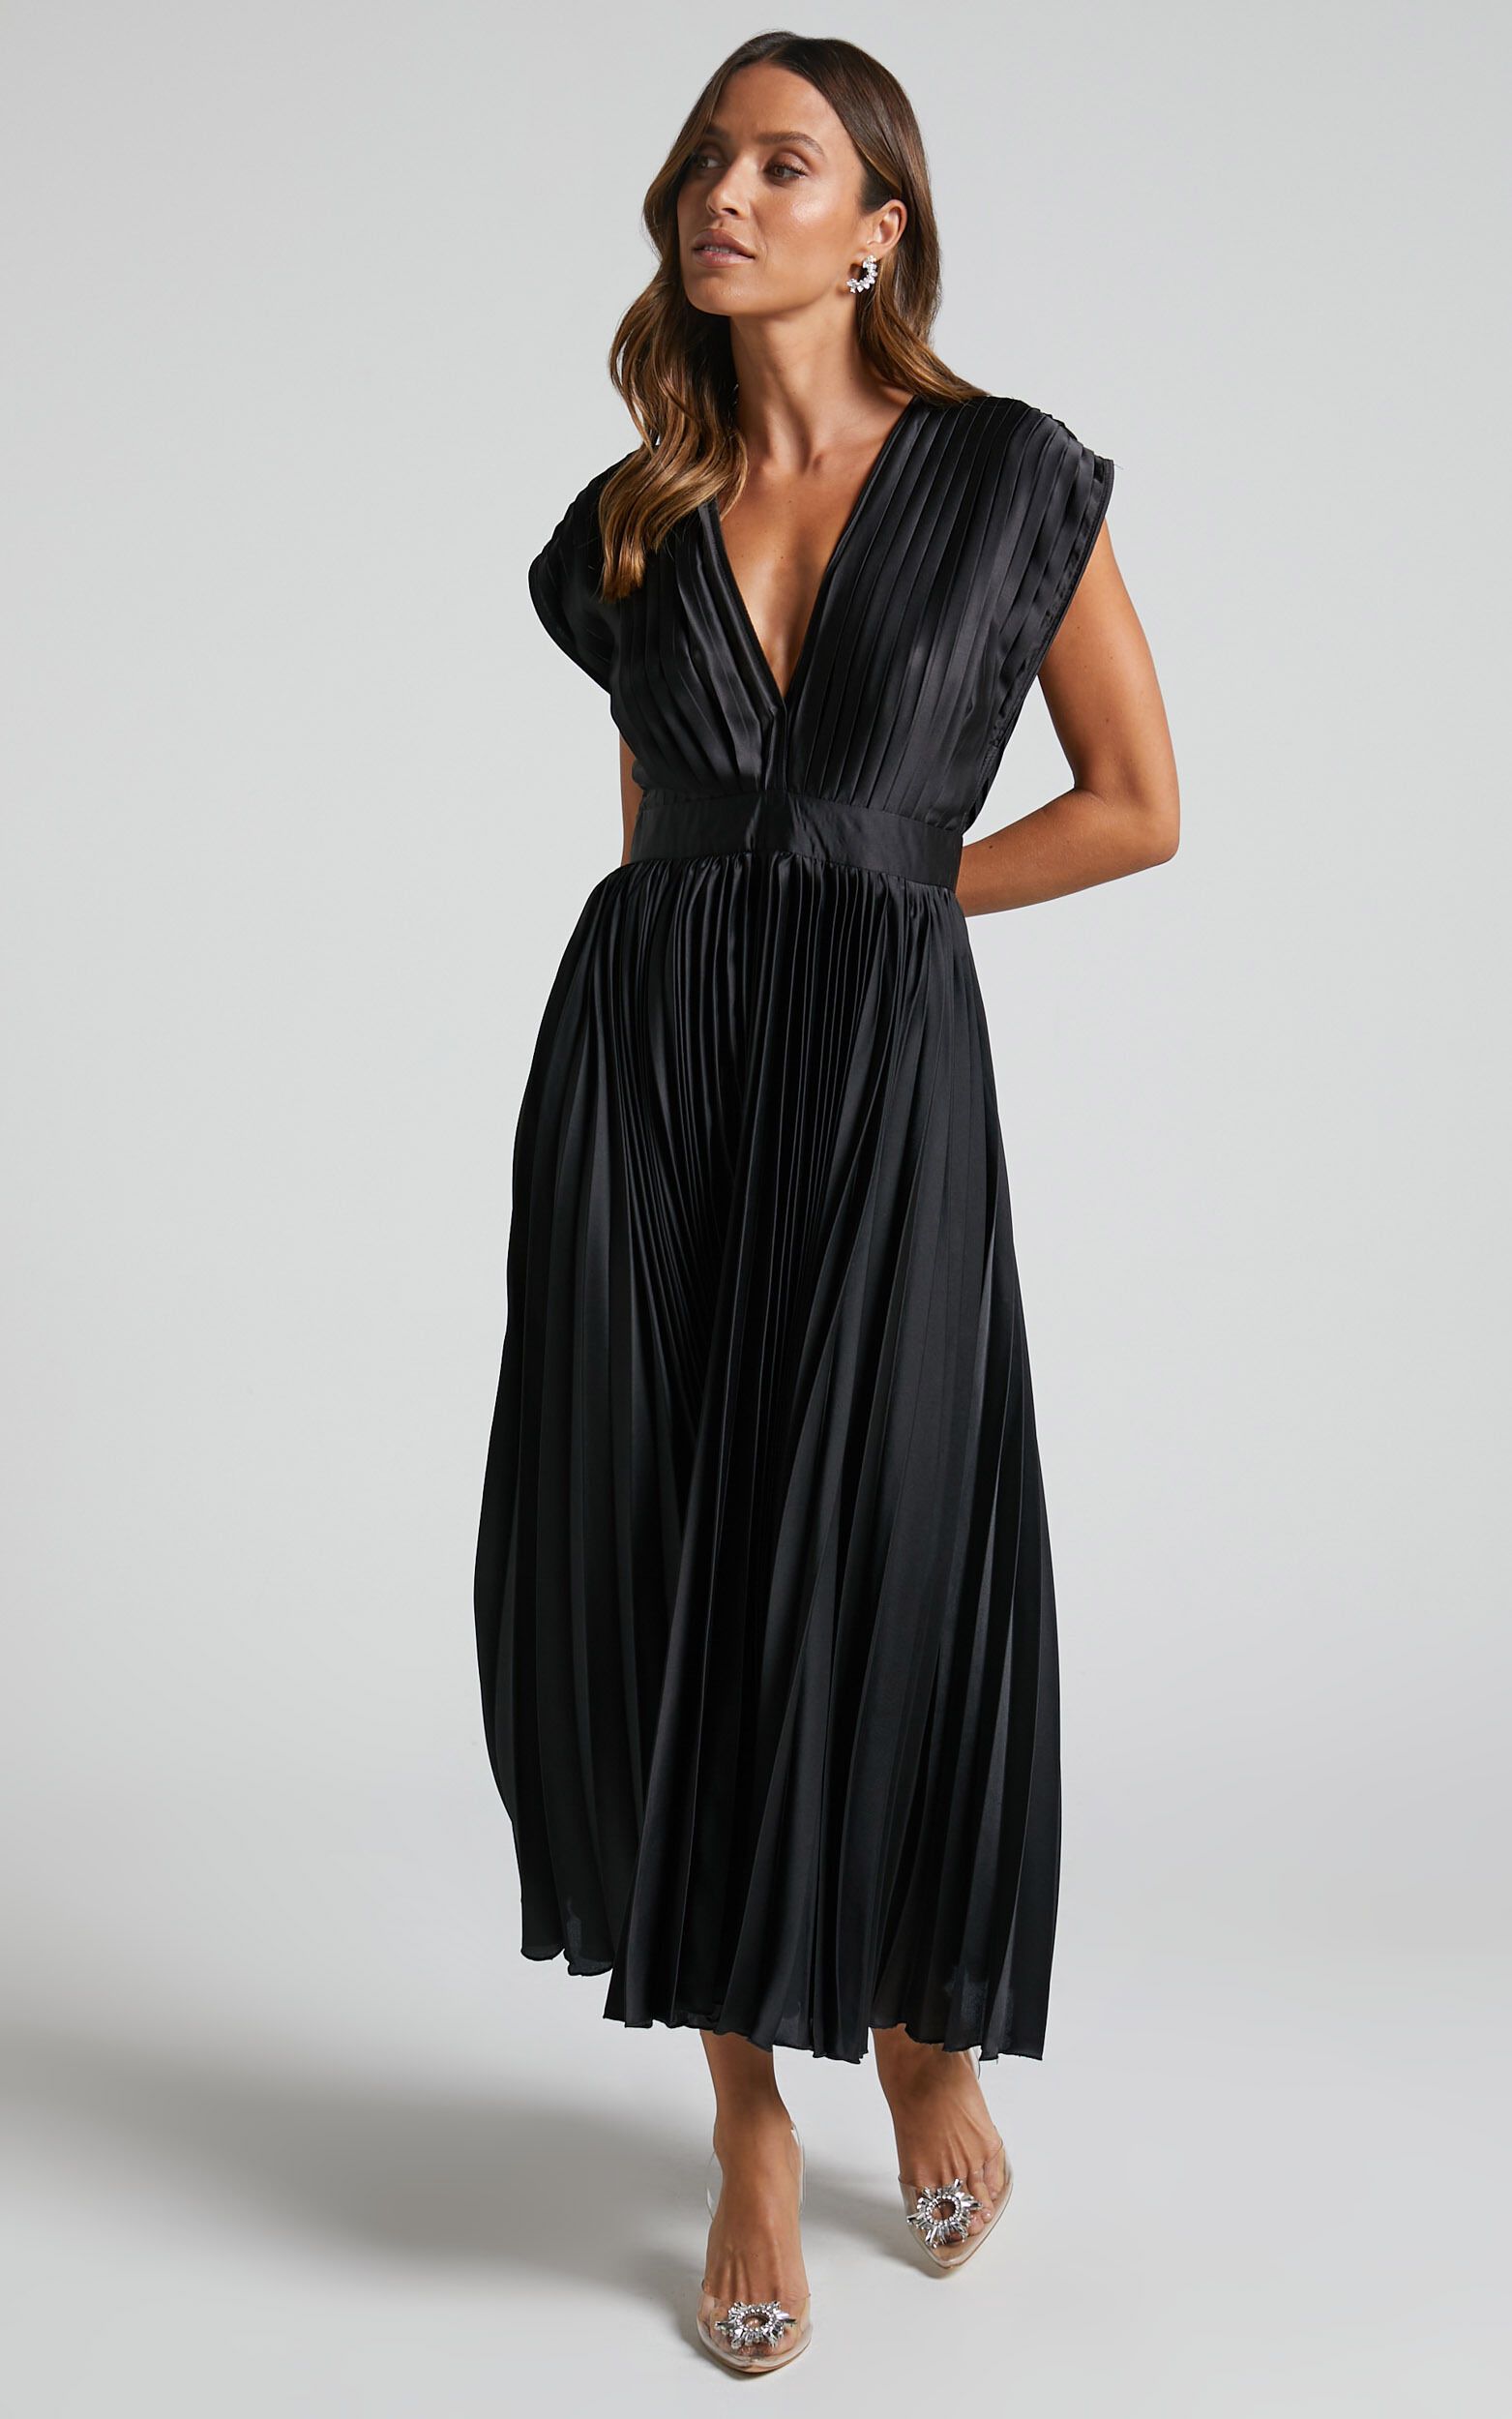 Della Midaxi Dress - Plunge Neck Short Sleeve Pleated Dress in Black | Showpo (US, UK & Europe)